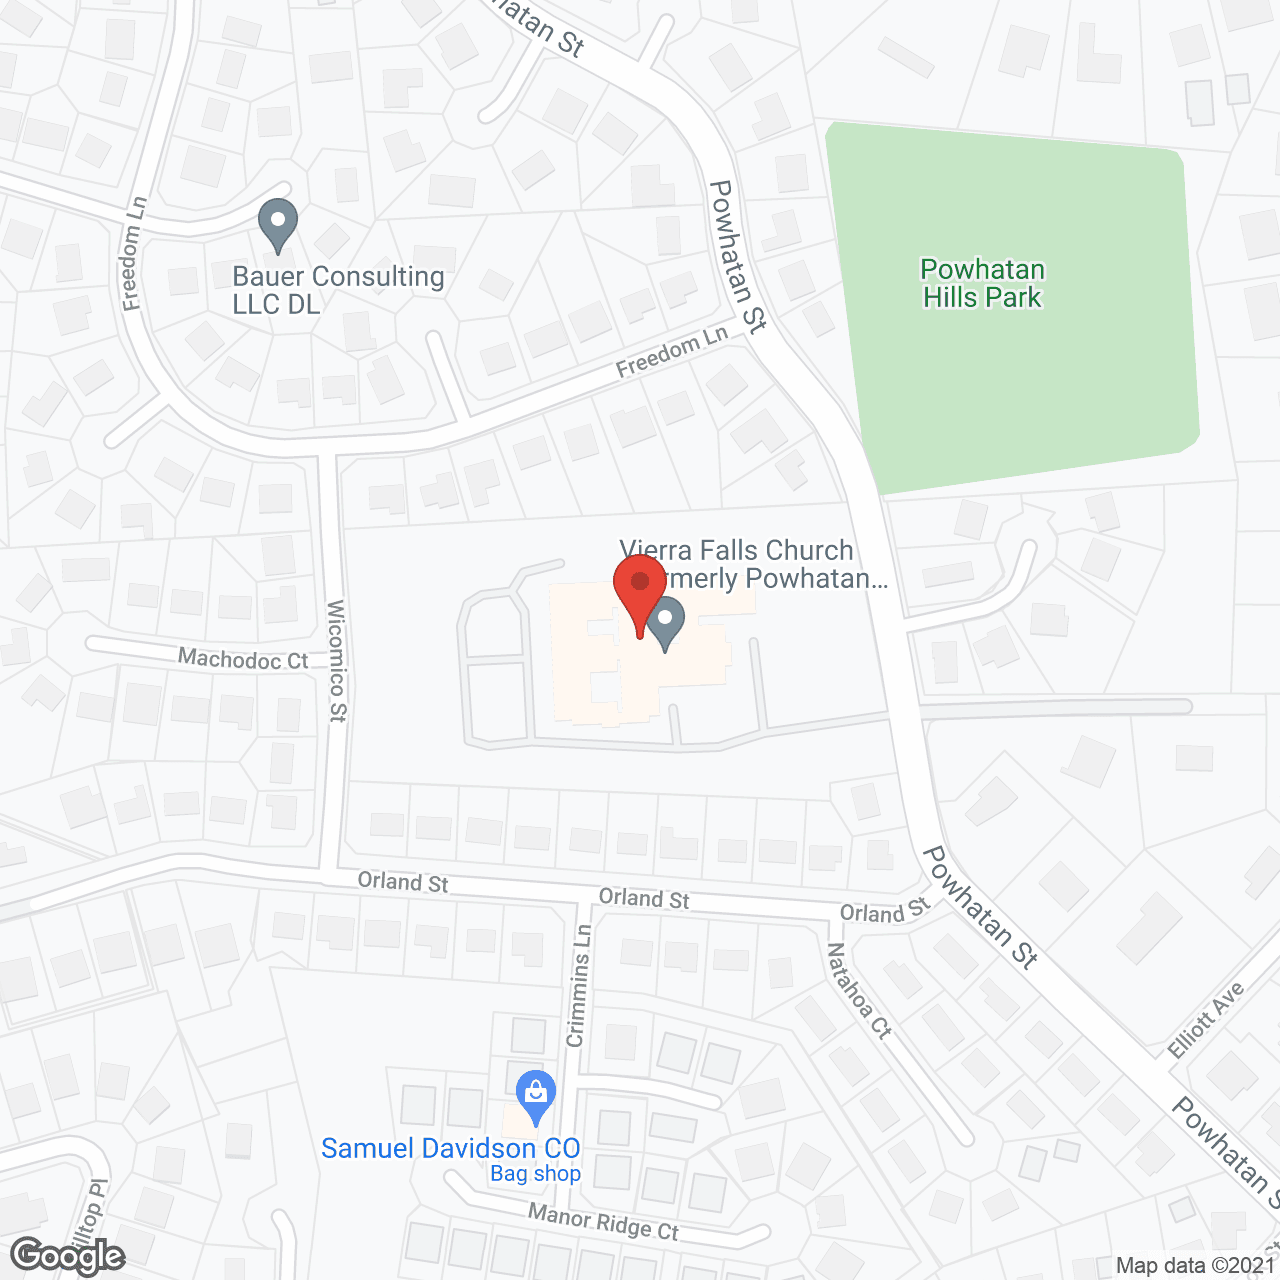 Vierra Falls Church in google map